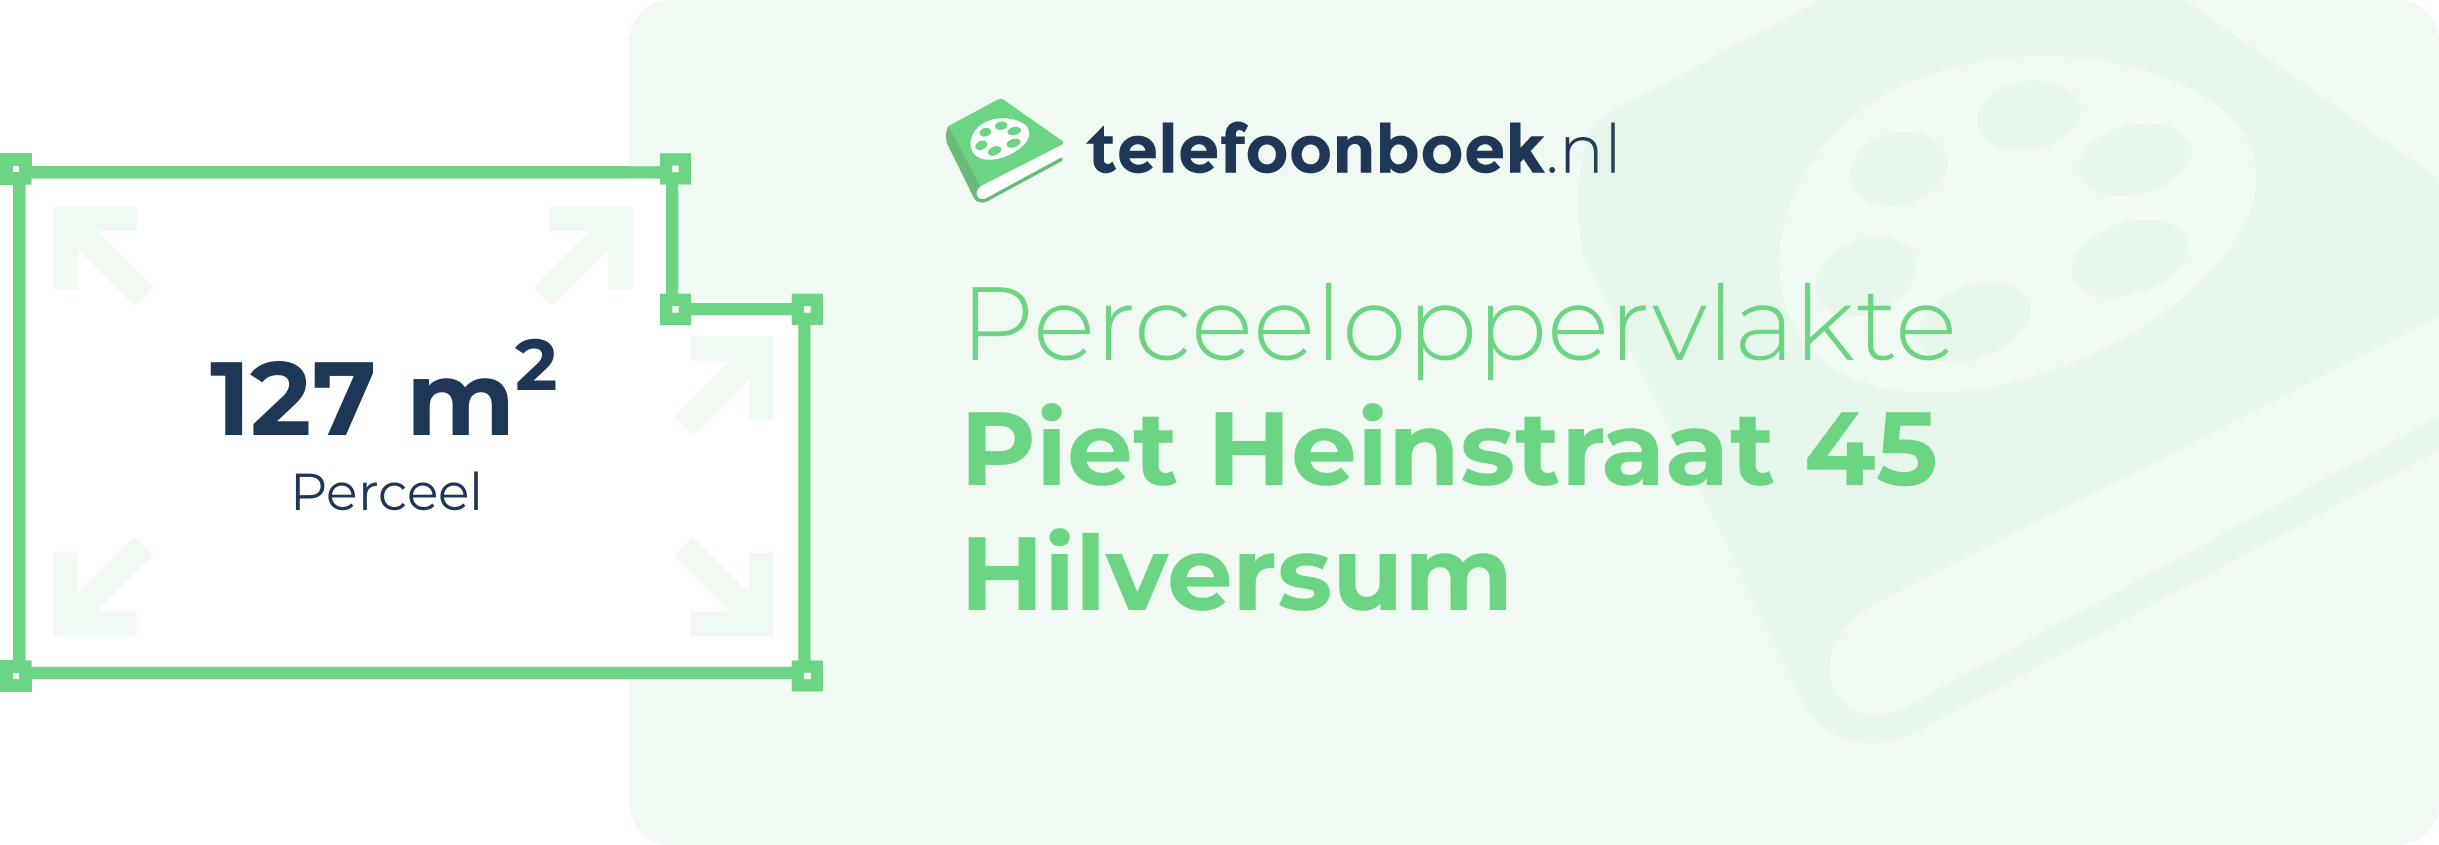 Perceeloppervlakte Piet Heinstraat 45 Hilversum